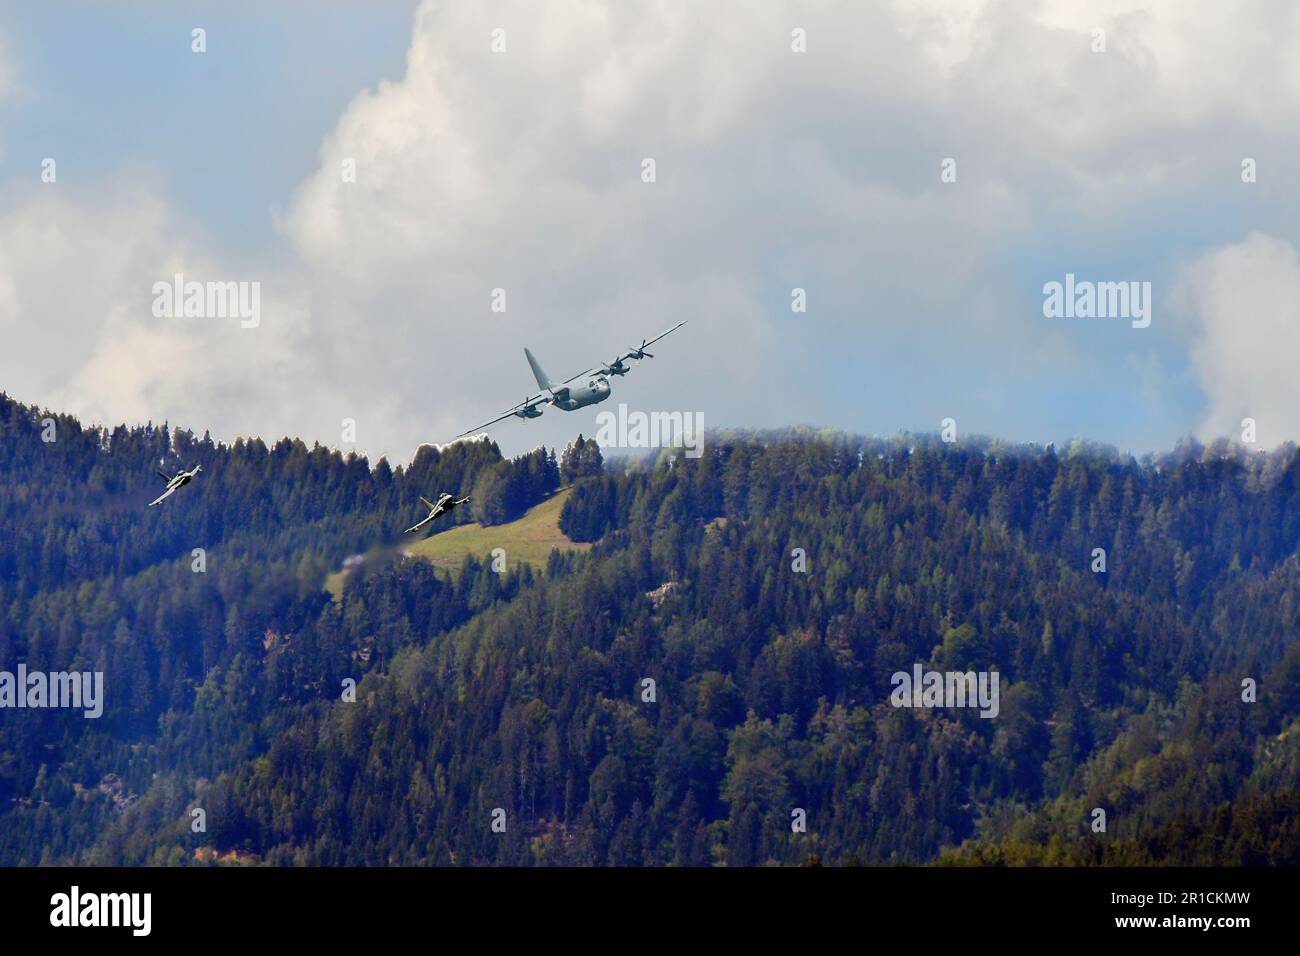 Zeltweg, Austria - 03 de septiembre de 2022: Espectáculo aéreo público en Estiria llamado Airpower 22, exhibición de vuelo - Dos cazas Eurofighter Typhoon persiguen un C-13 Foto de stock